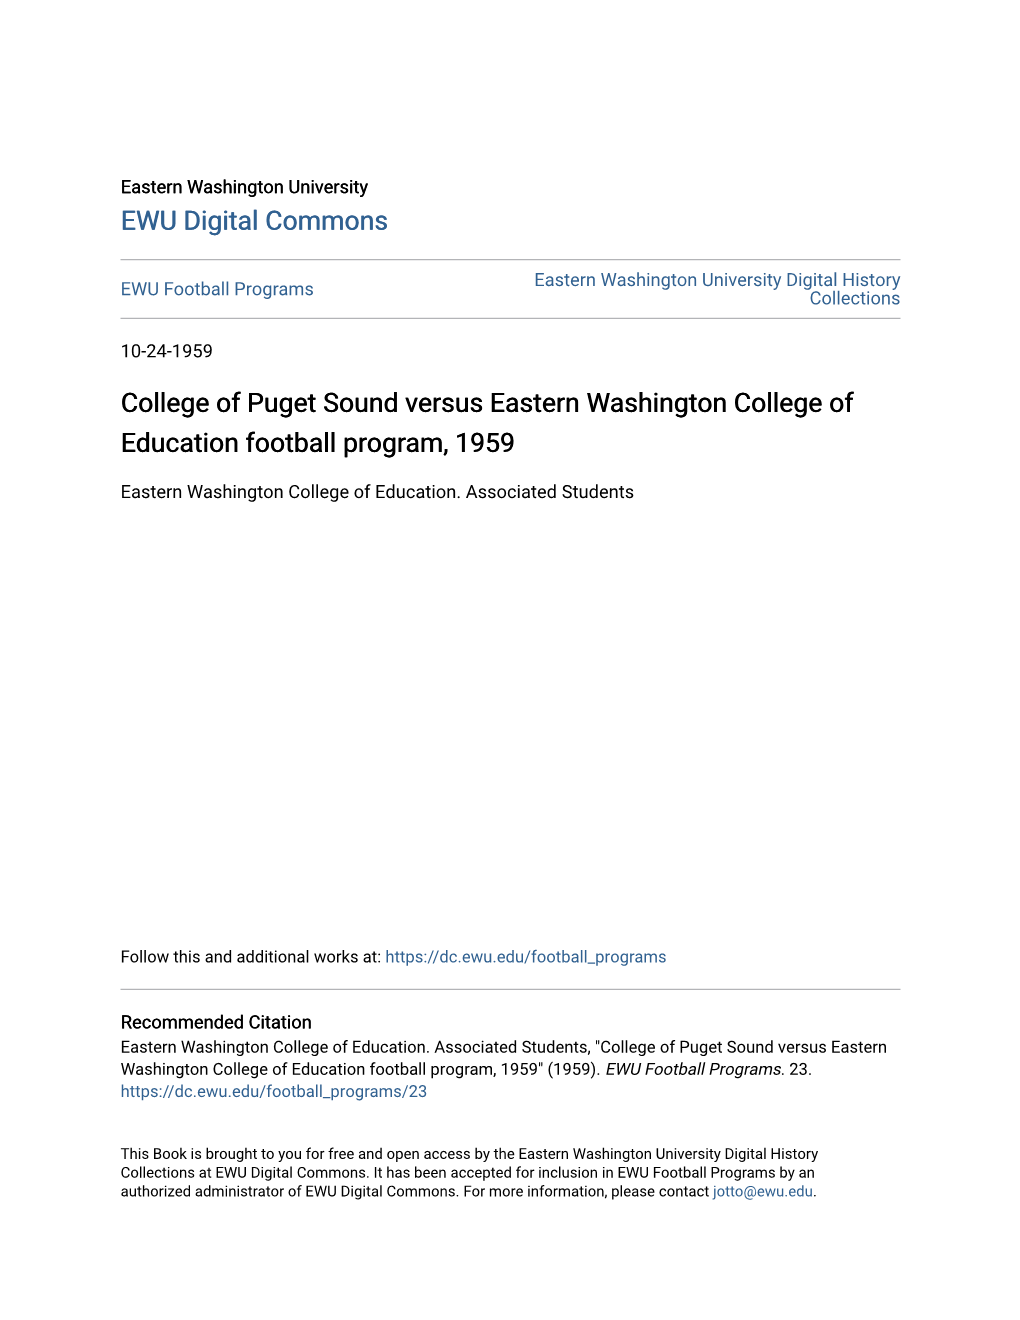 College of Puget Sound Versus Eastern Washington College of Education Football Program, 1959